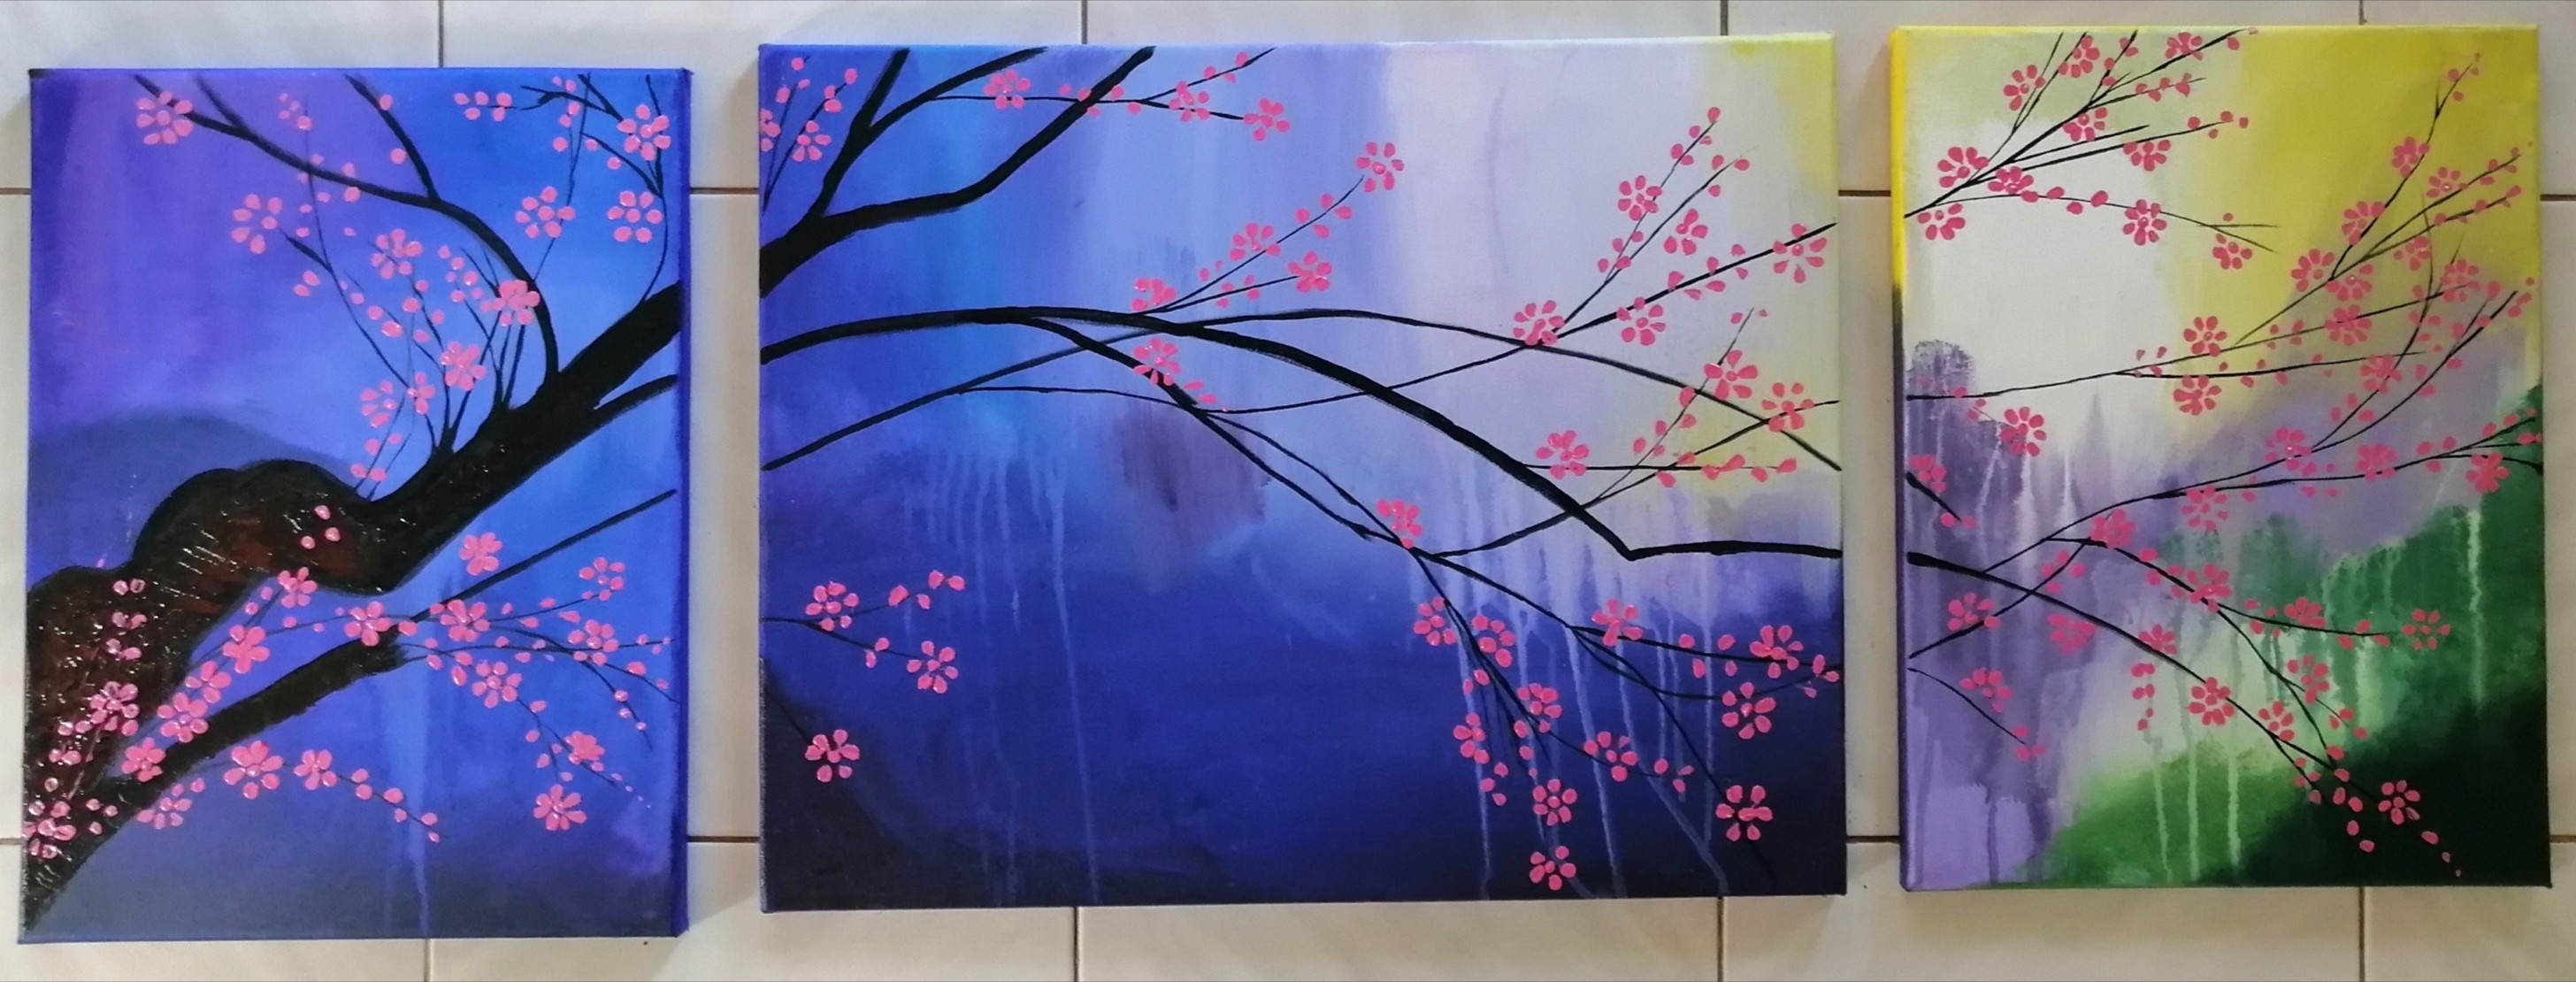 Cherry blossom by Kobika Amalan